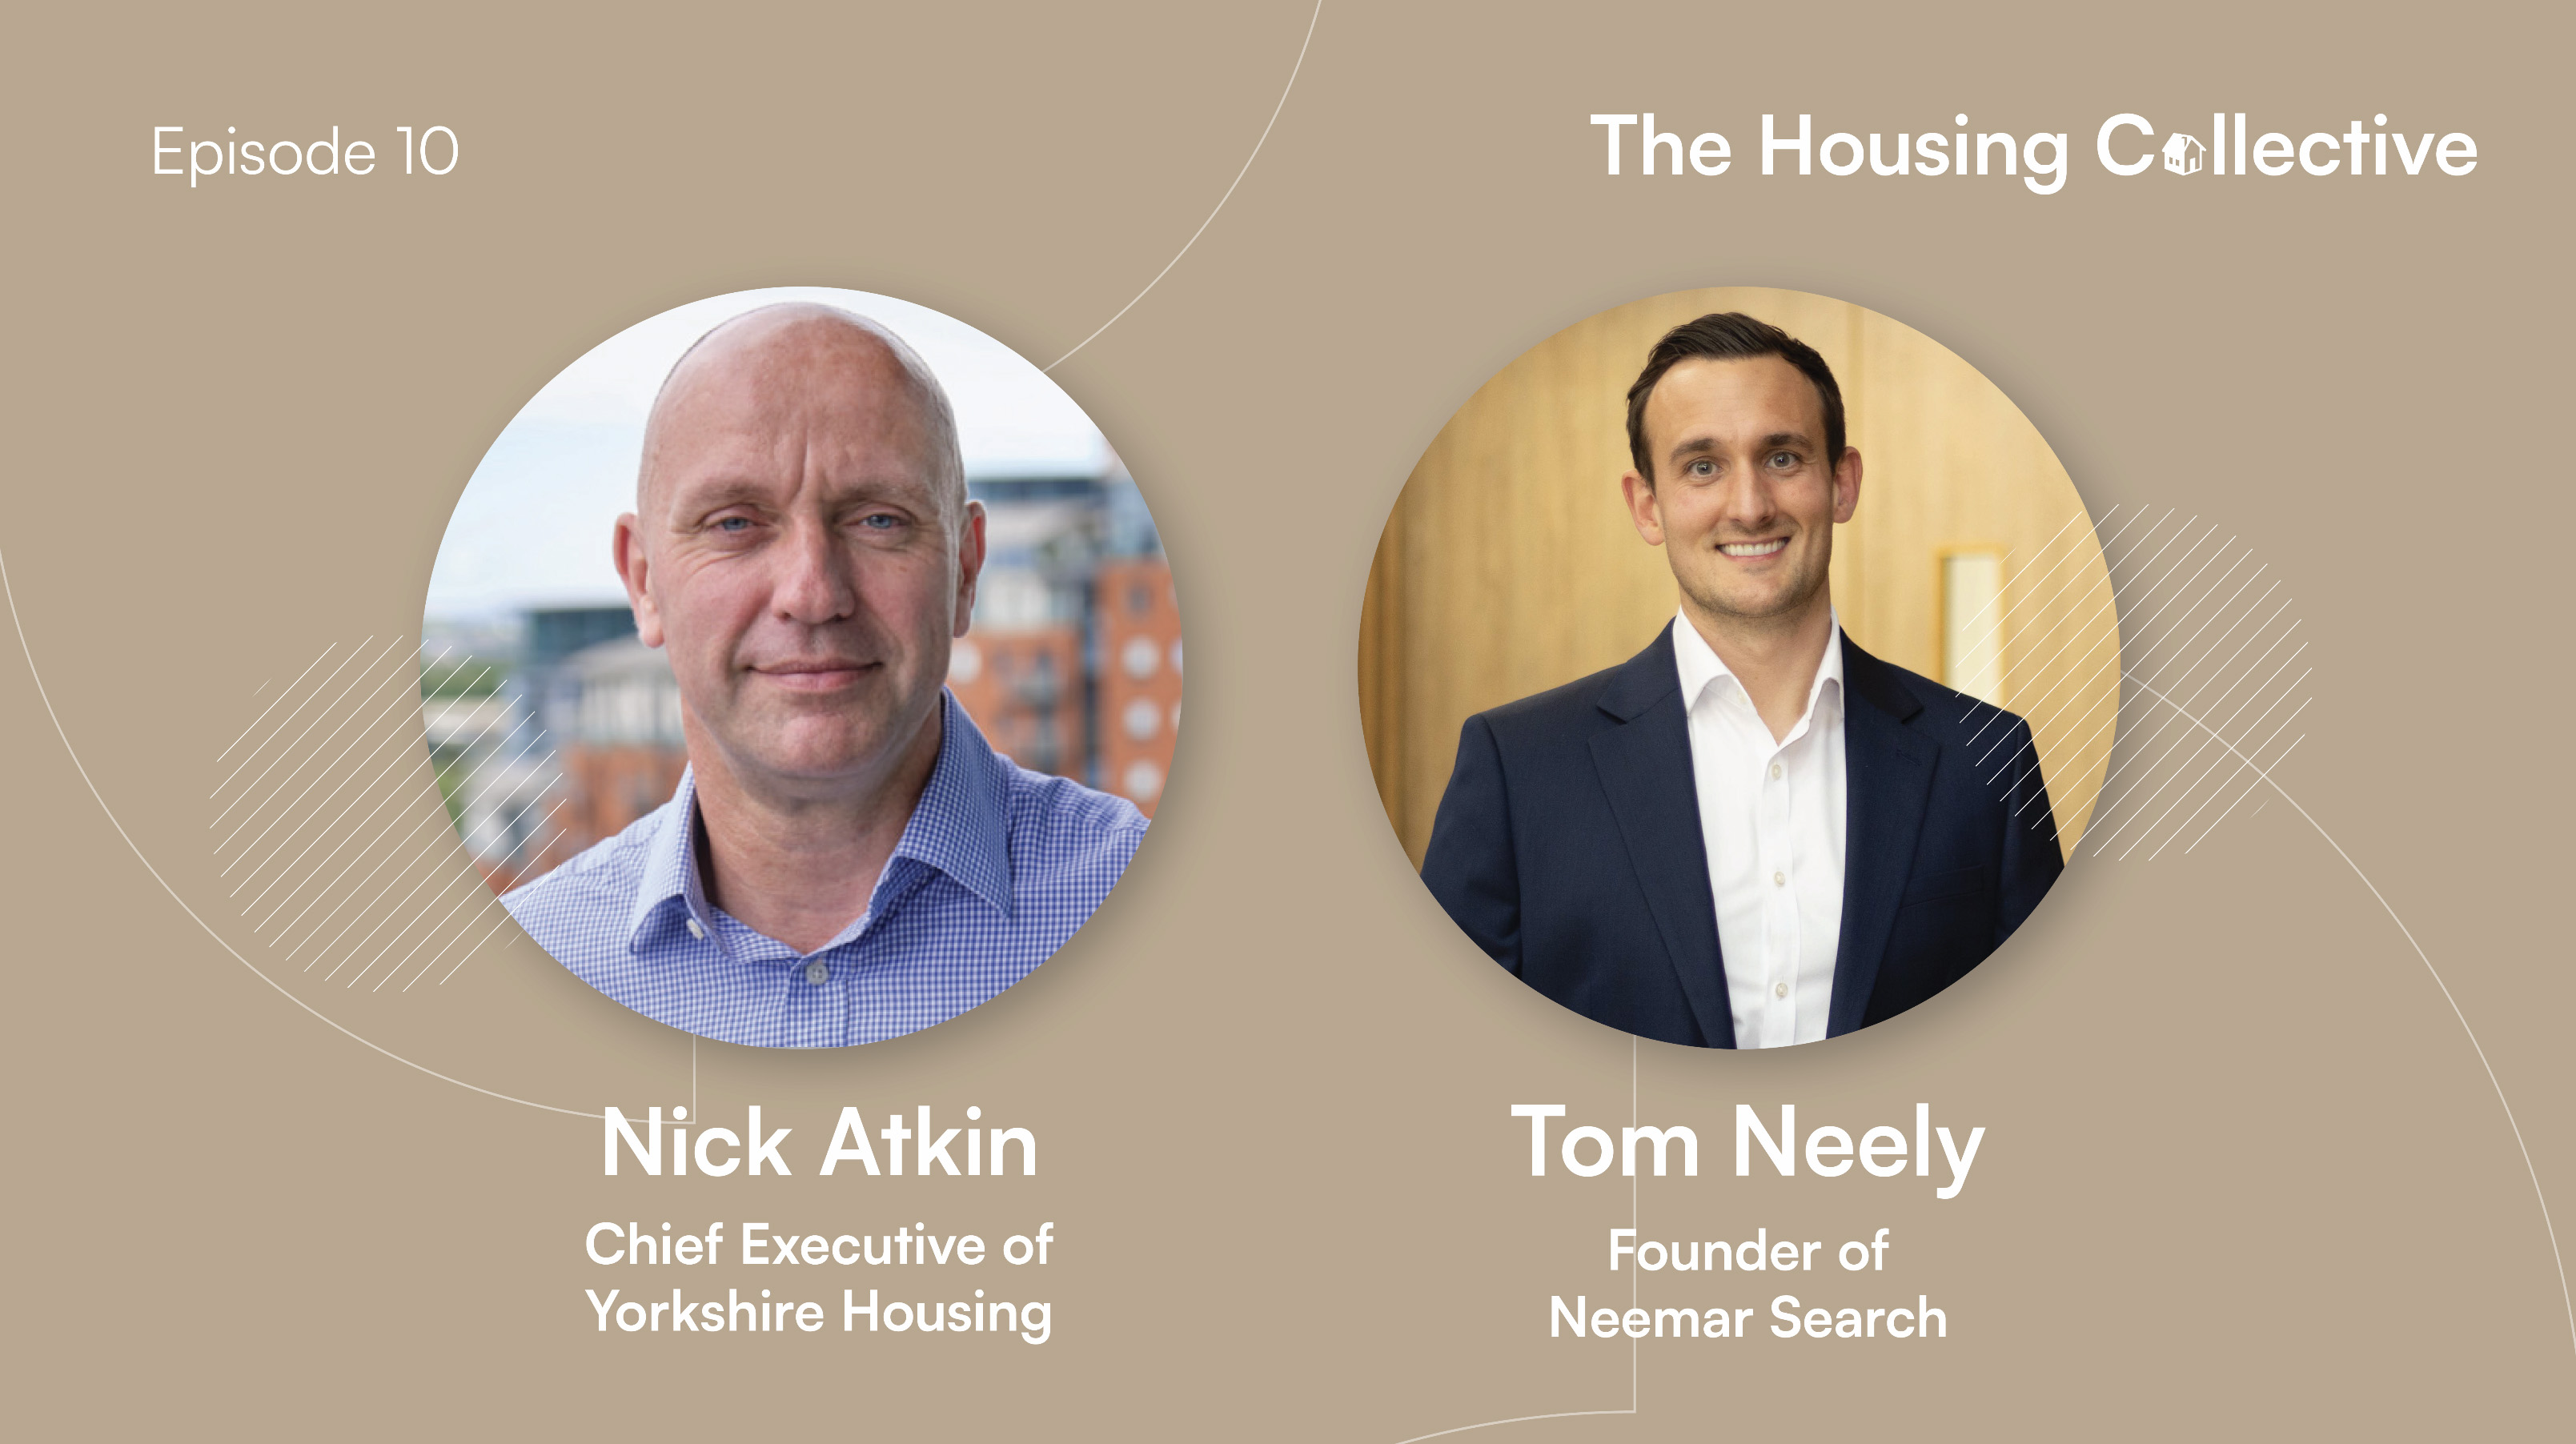 Nick Atkin - Chief Executive at Yorkshire Housing